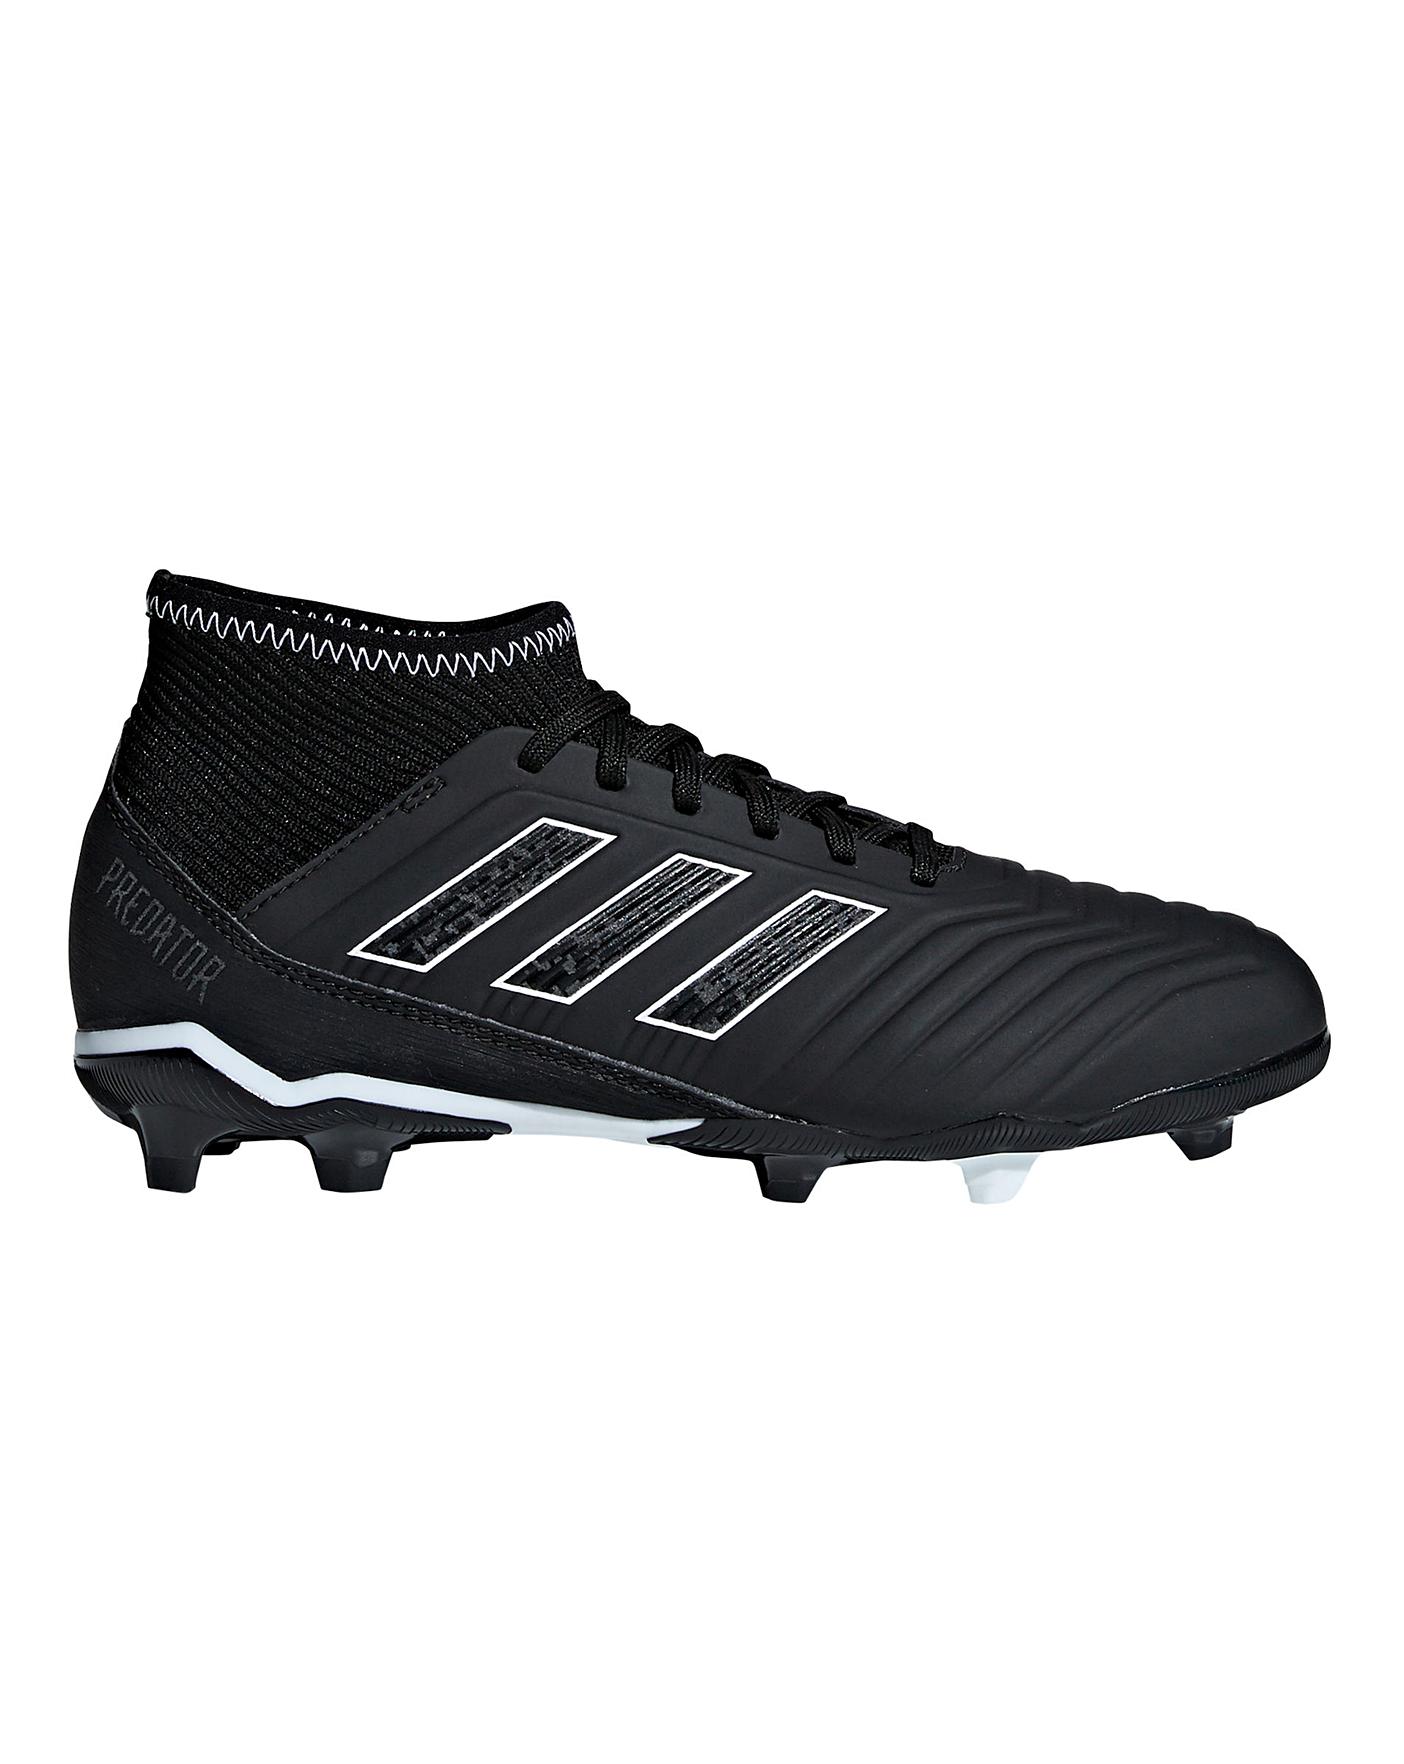 adidas Predator 18.3 FG Football Boots 